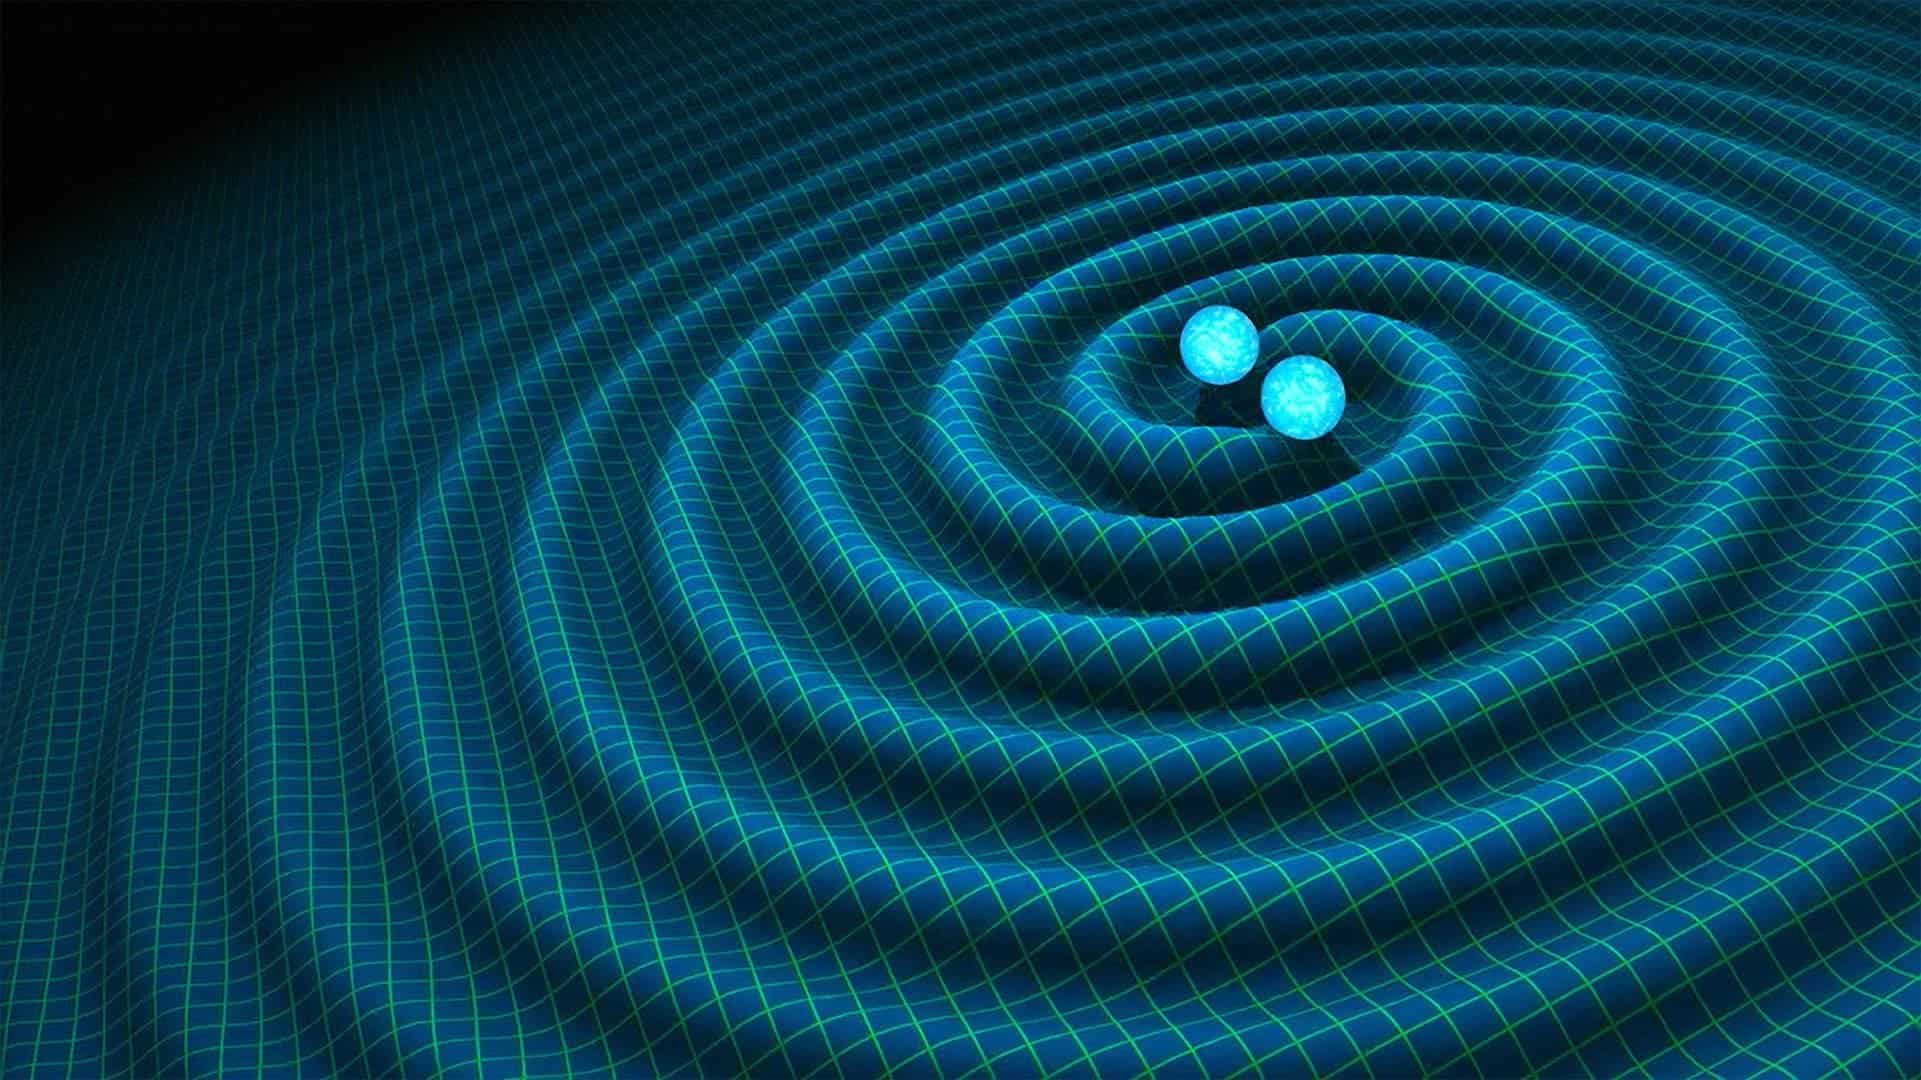 An artist's impression of gravitational waves generated by binary neutron stars. Credit: R. Hurt/Caltech-JPL/EPA.